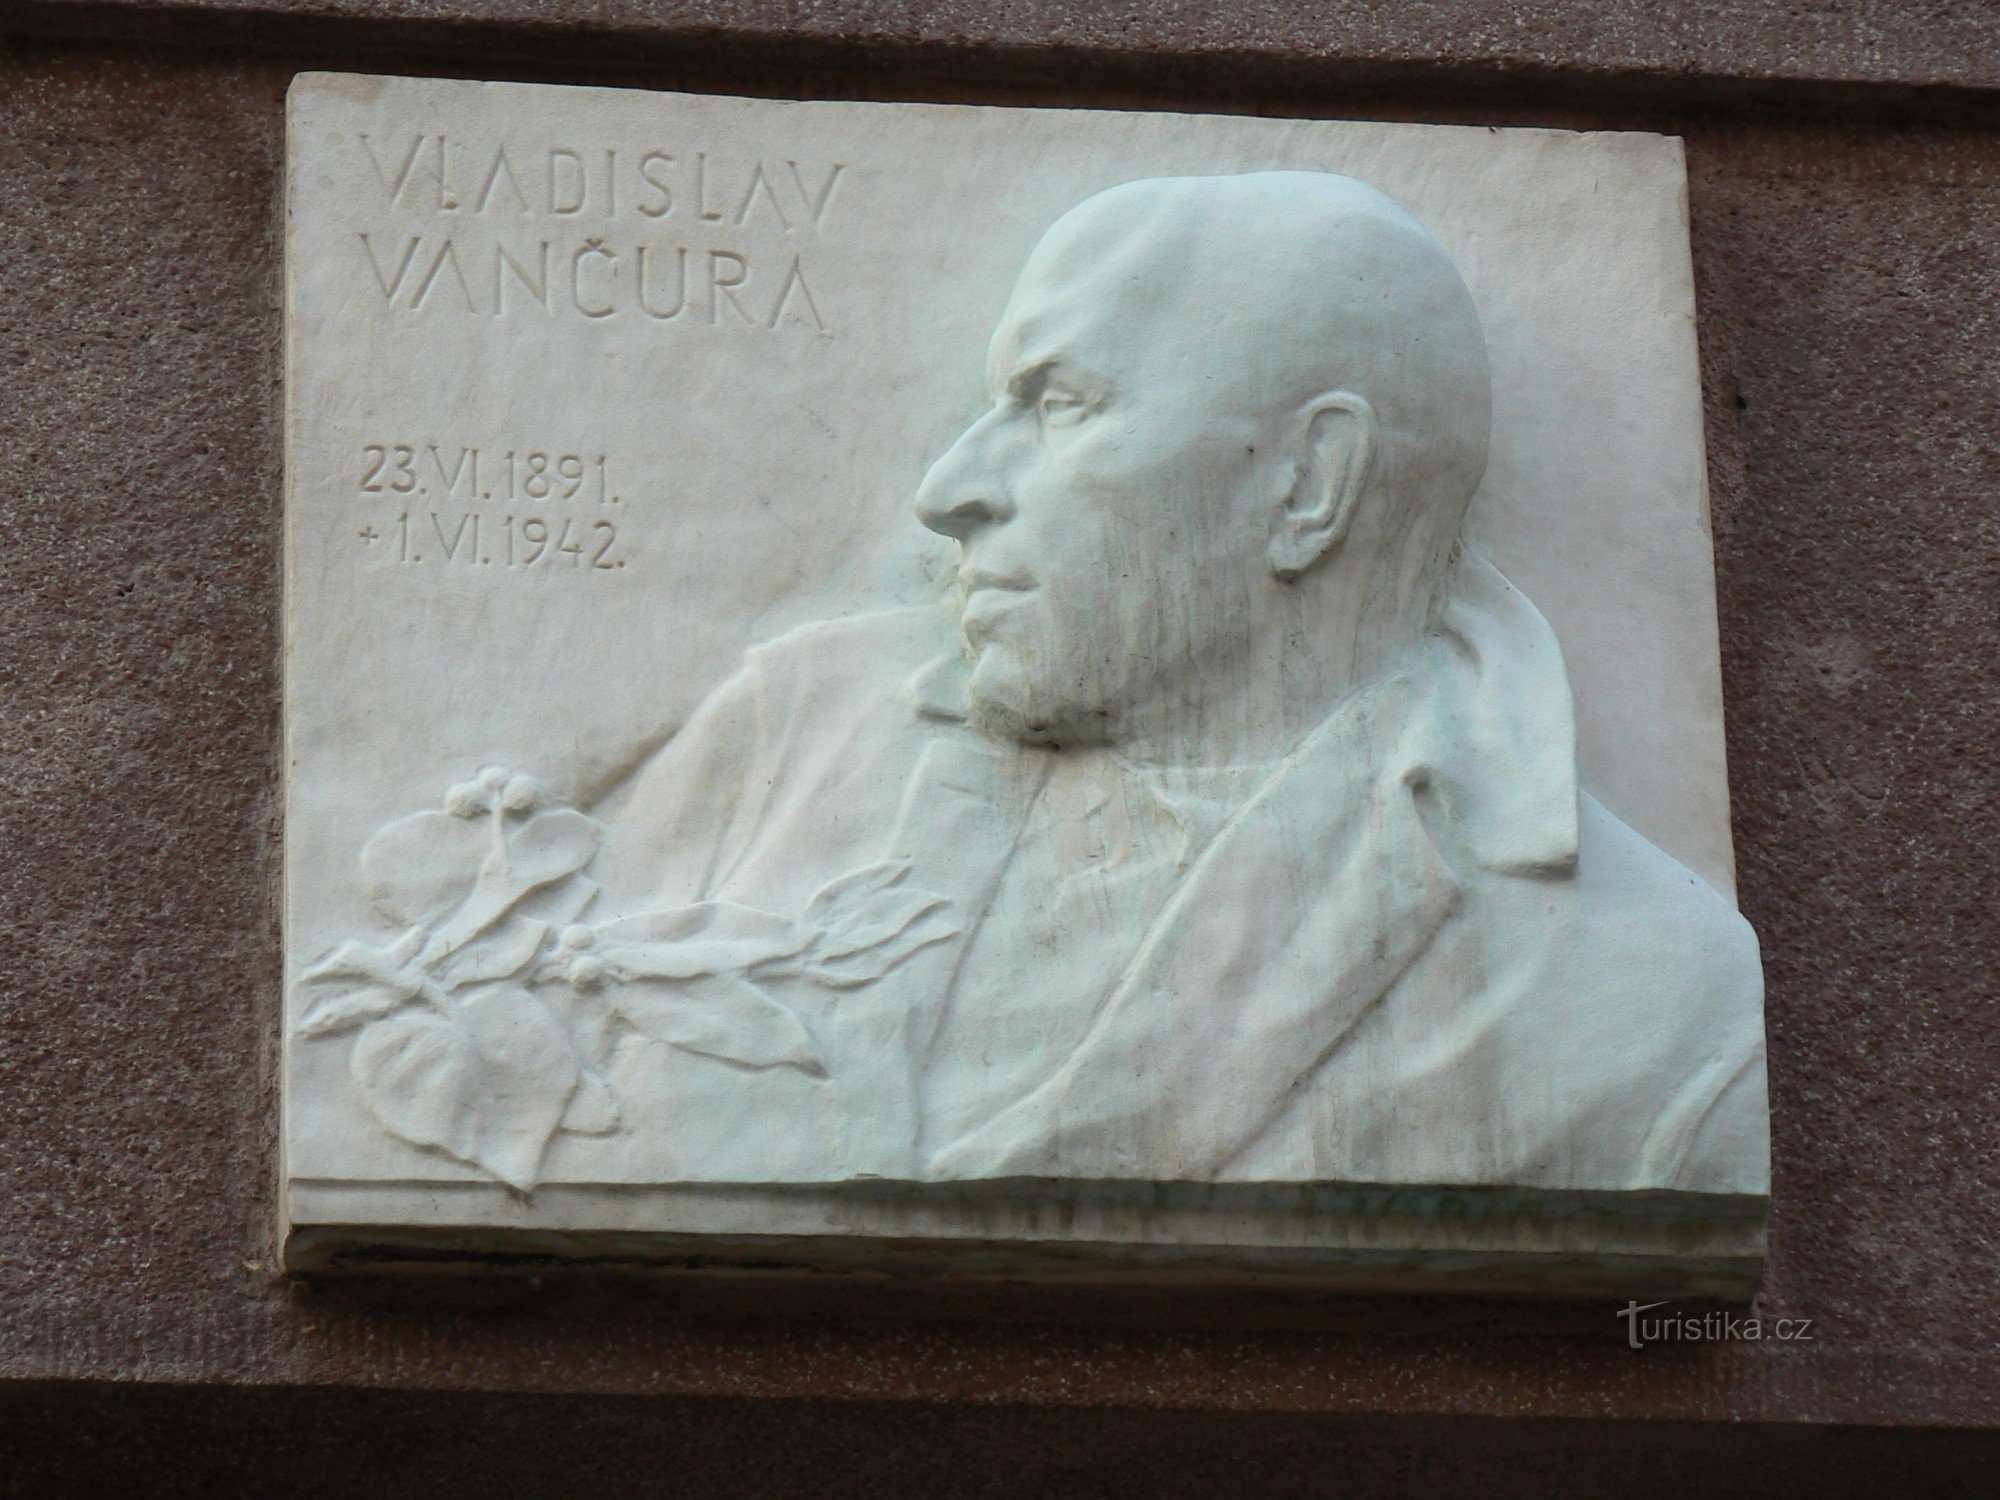 Vladislav Vančura mindeplade